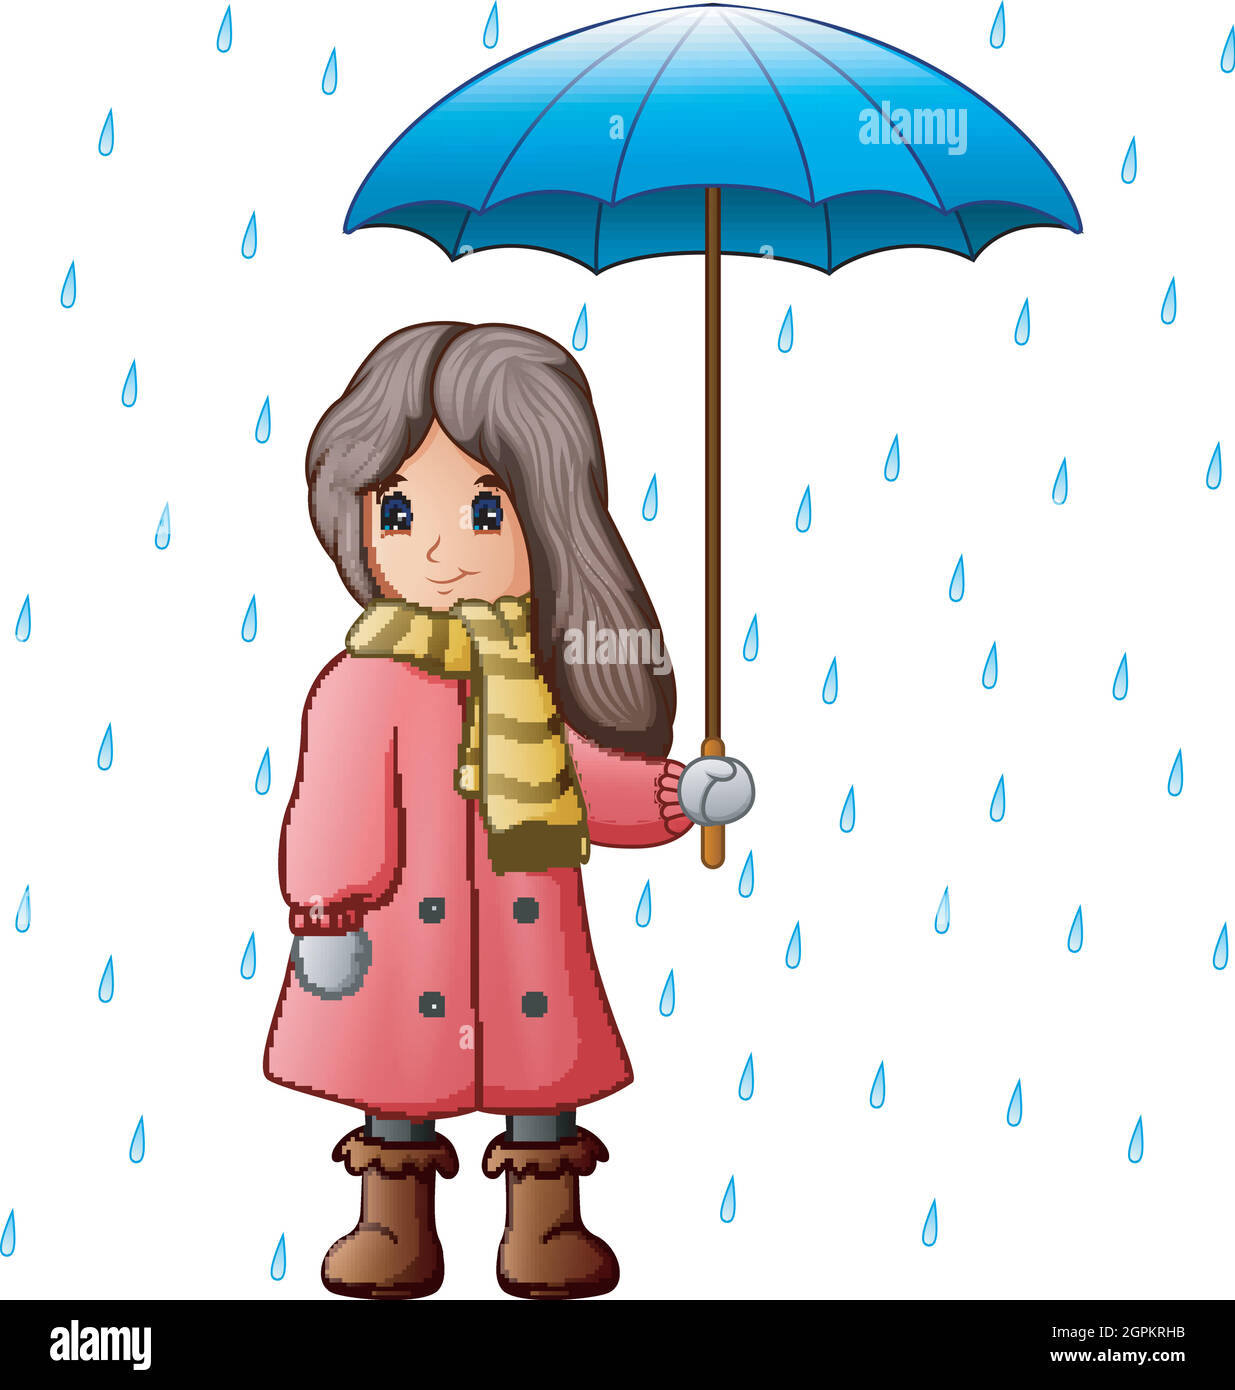 292 Rain Girl Cartoon Stock Photos - Free & Royalty-Free Stock Photos from  Dreamstime